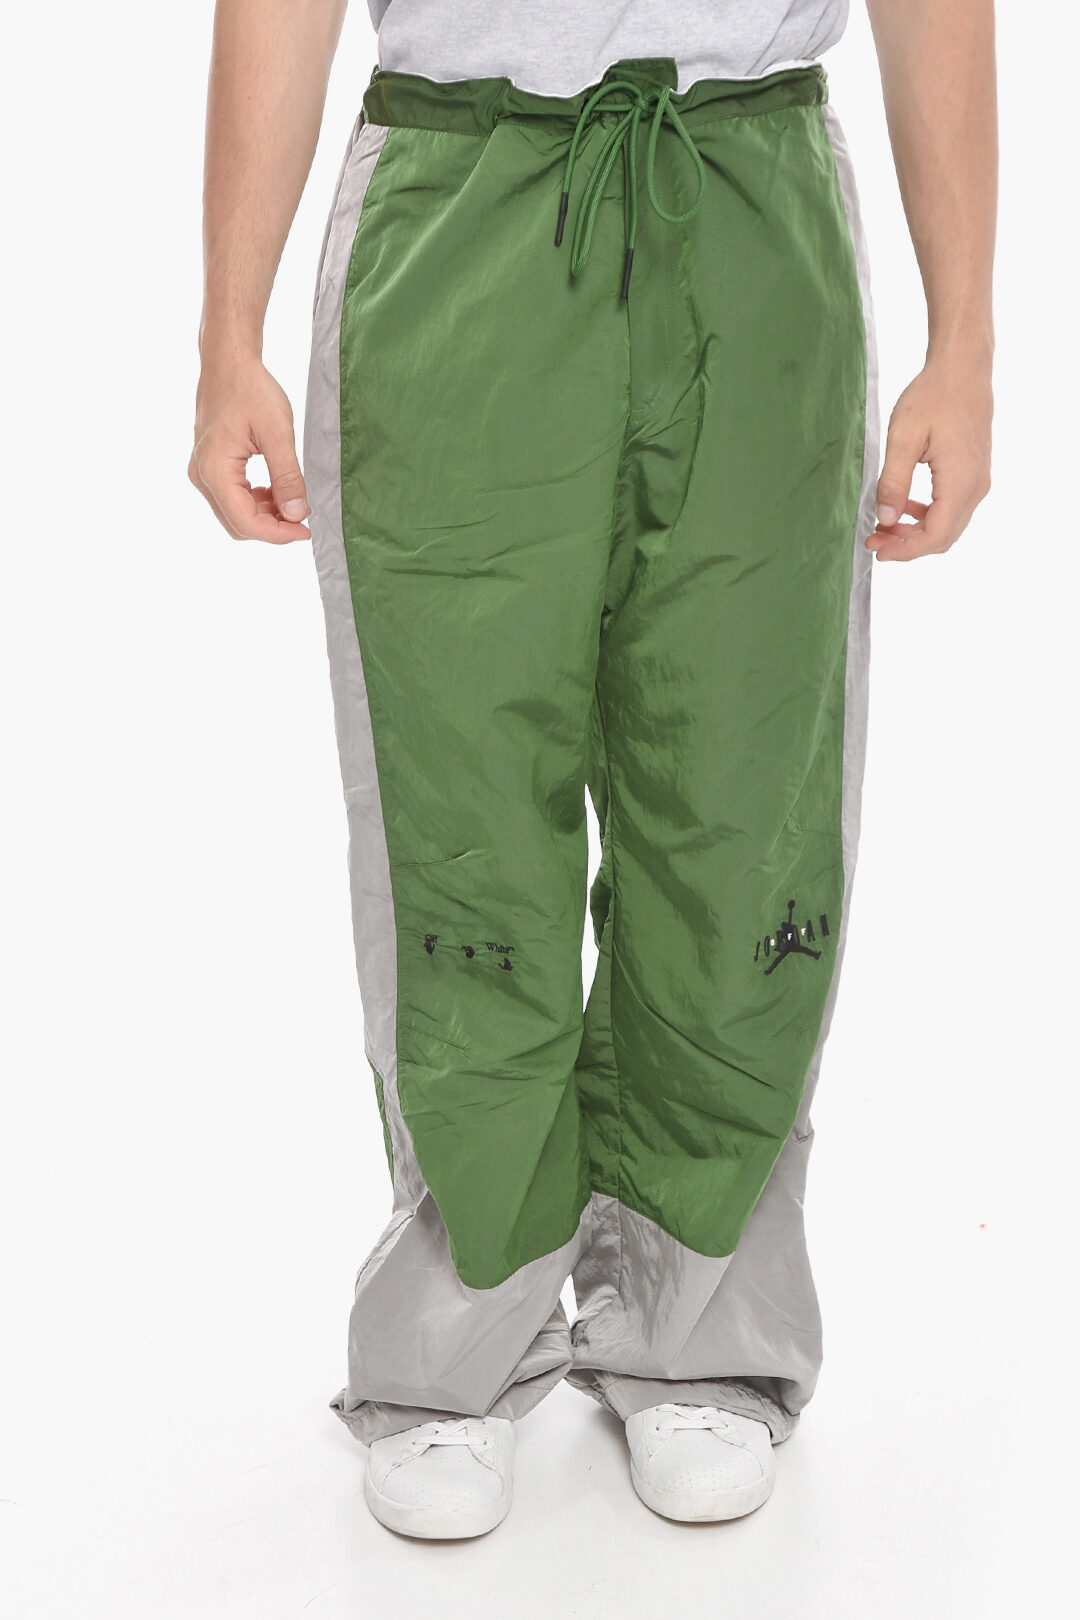 Shop Air Jordan Jogger Pants online | Lazada.com.ph-cheohanoi.vn